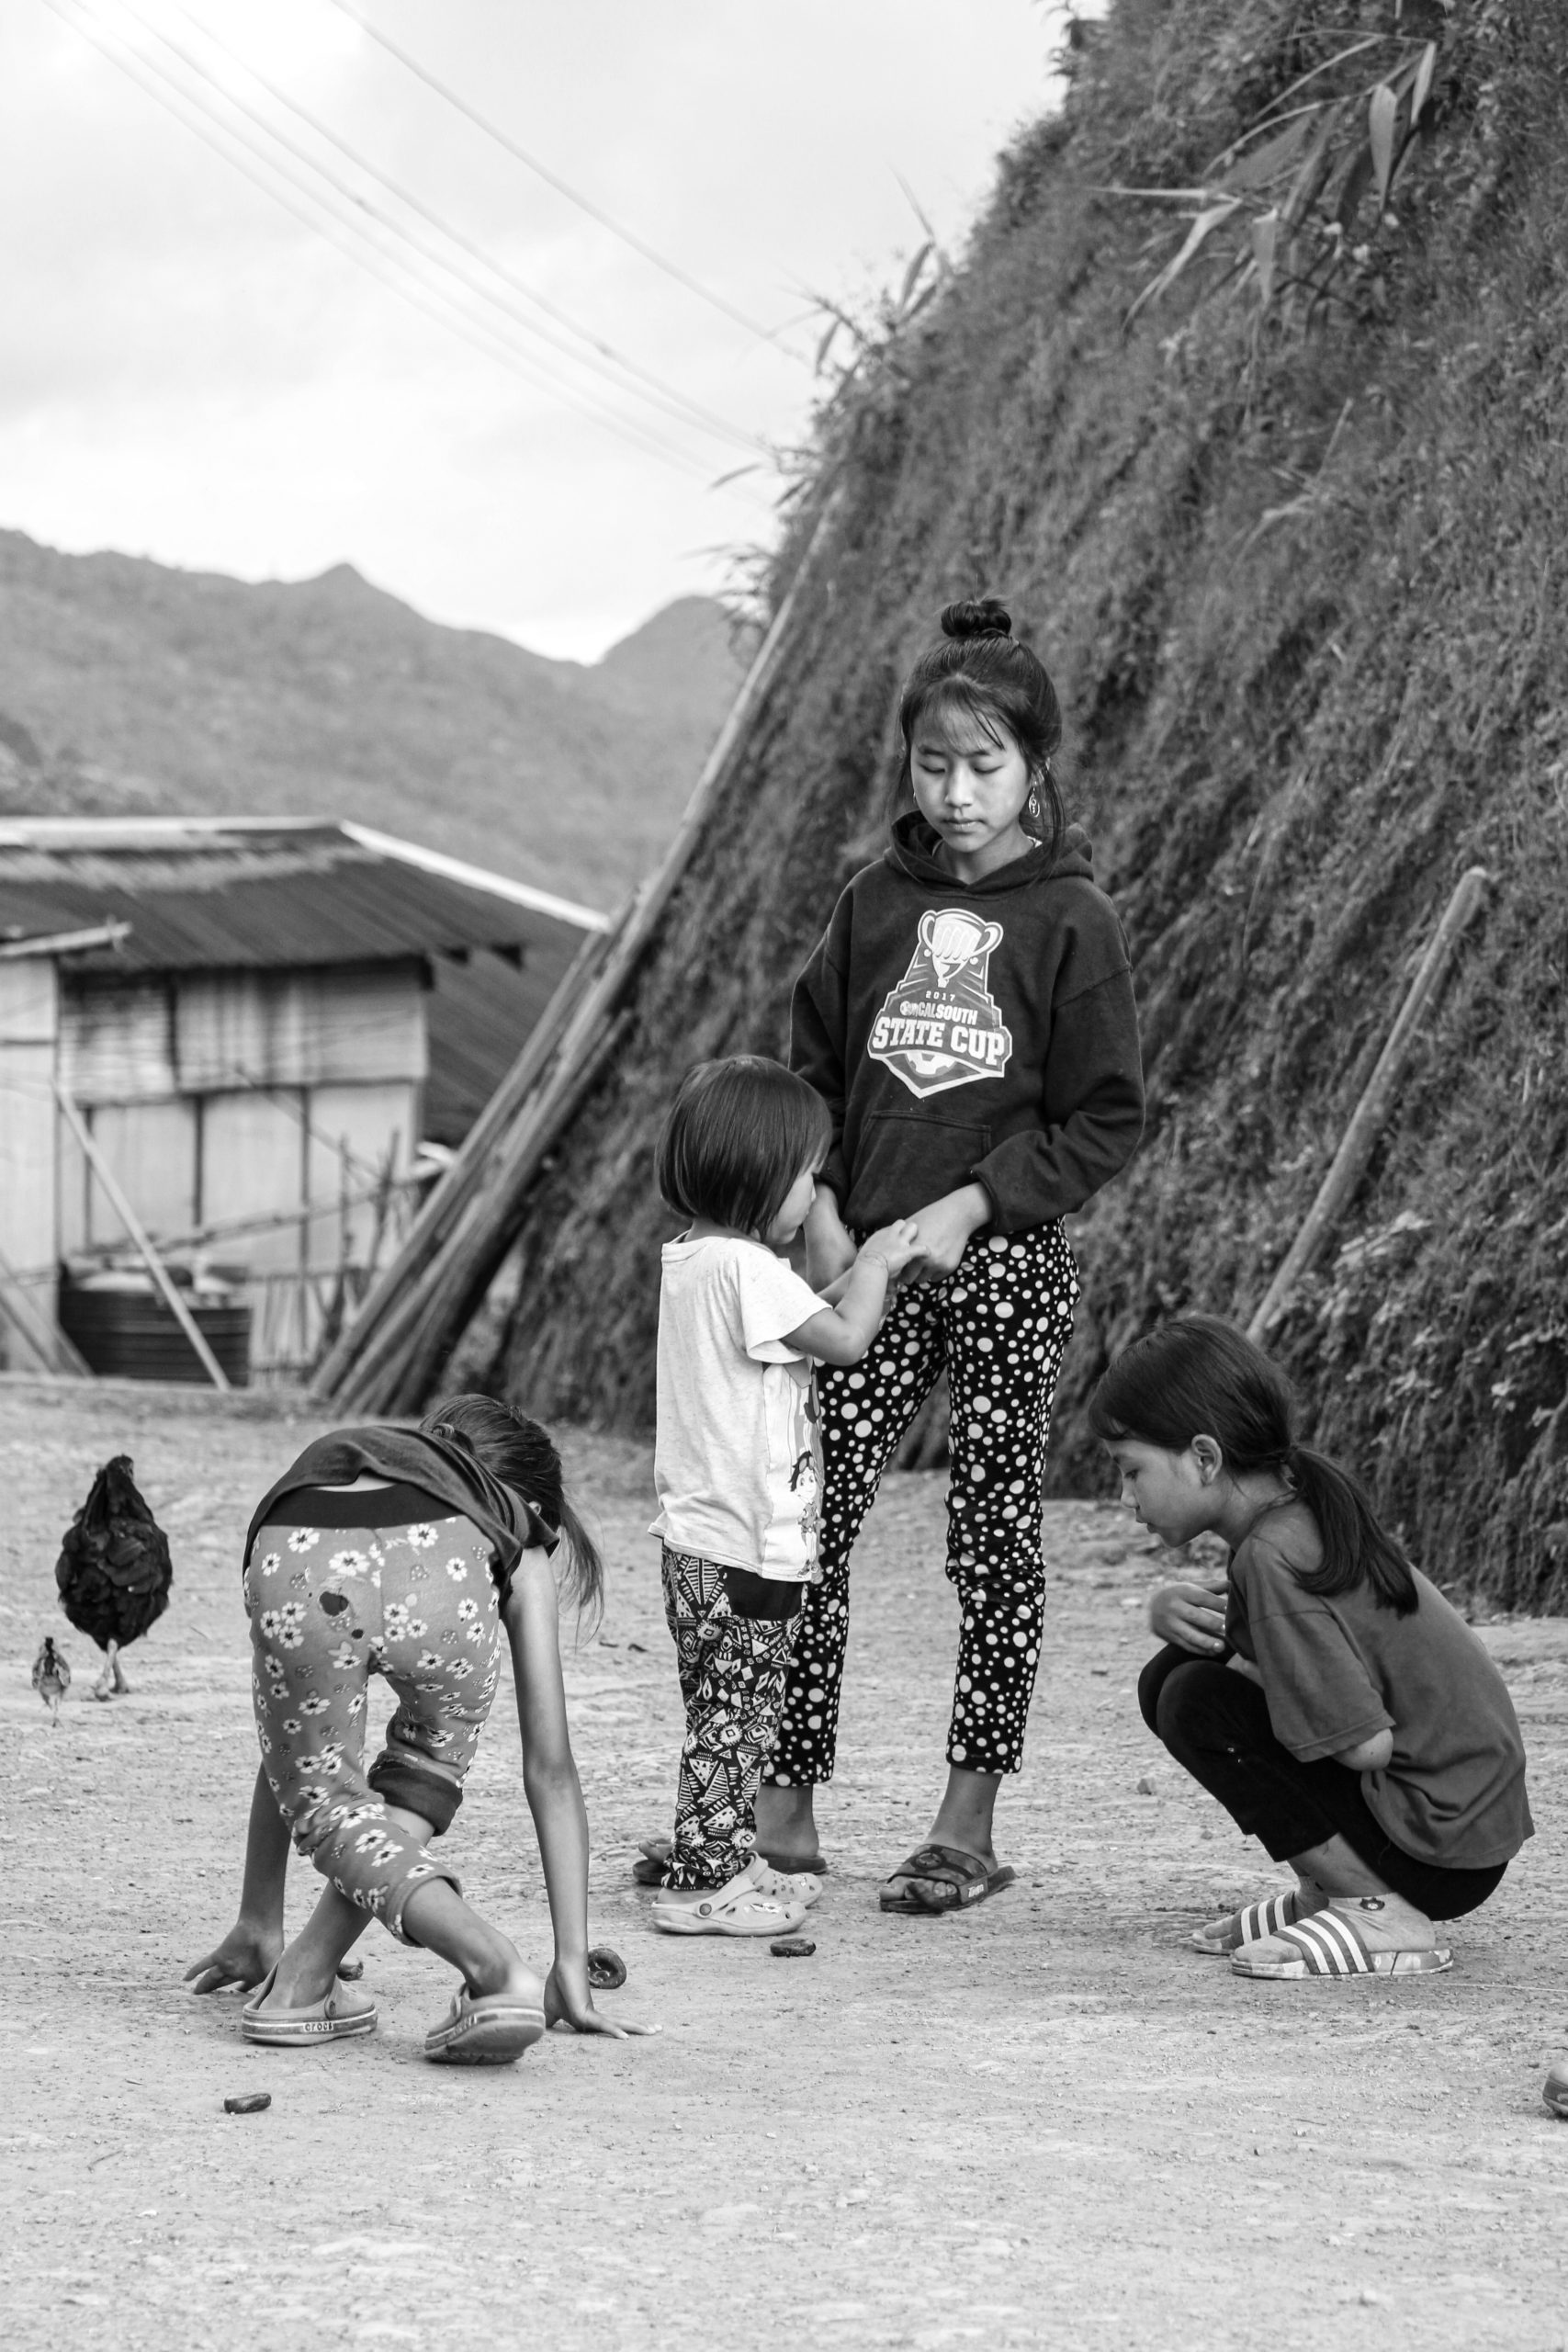 Children playing in a village